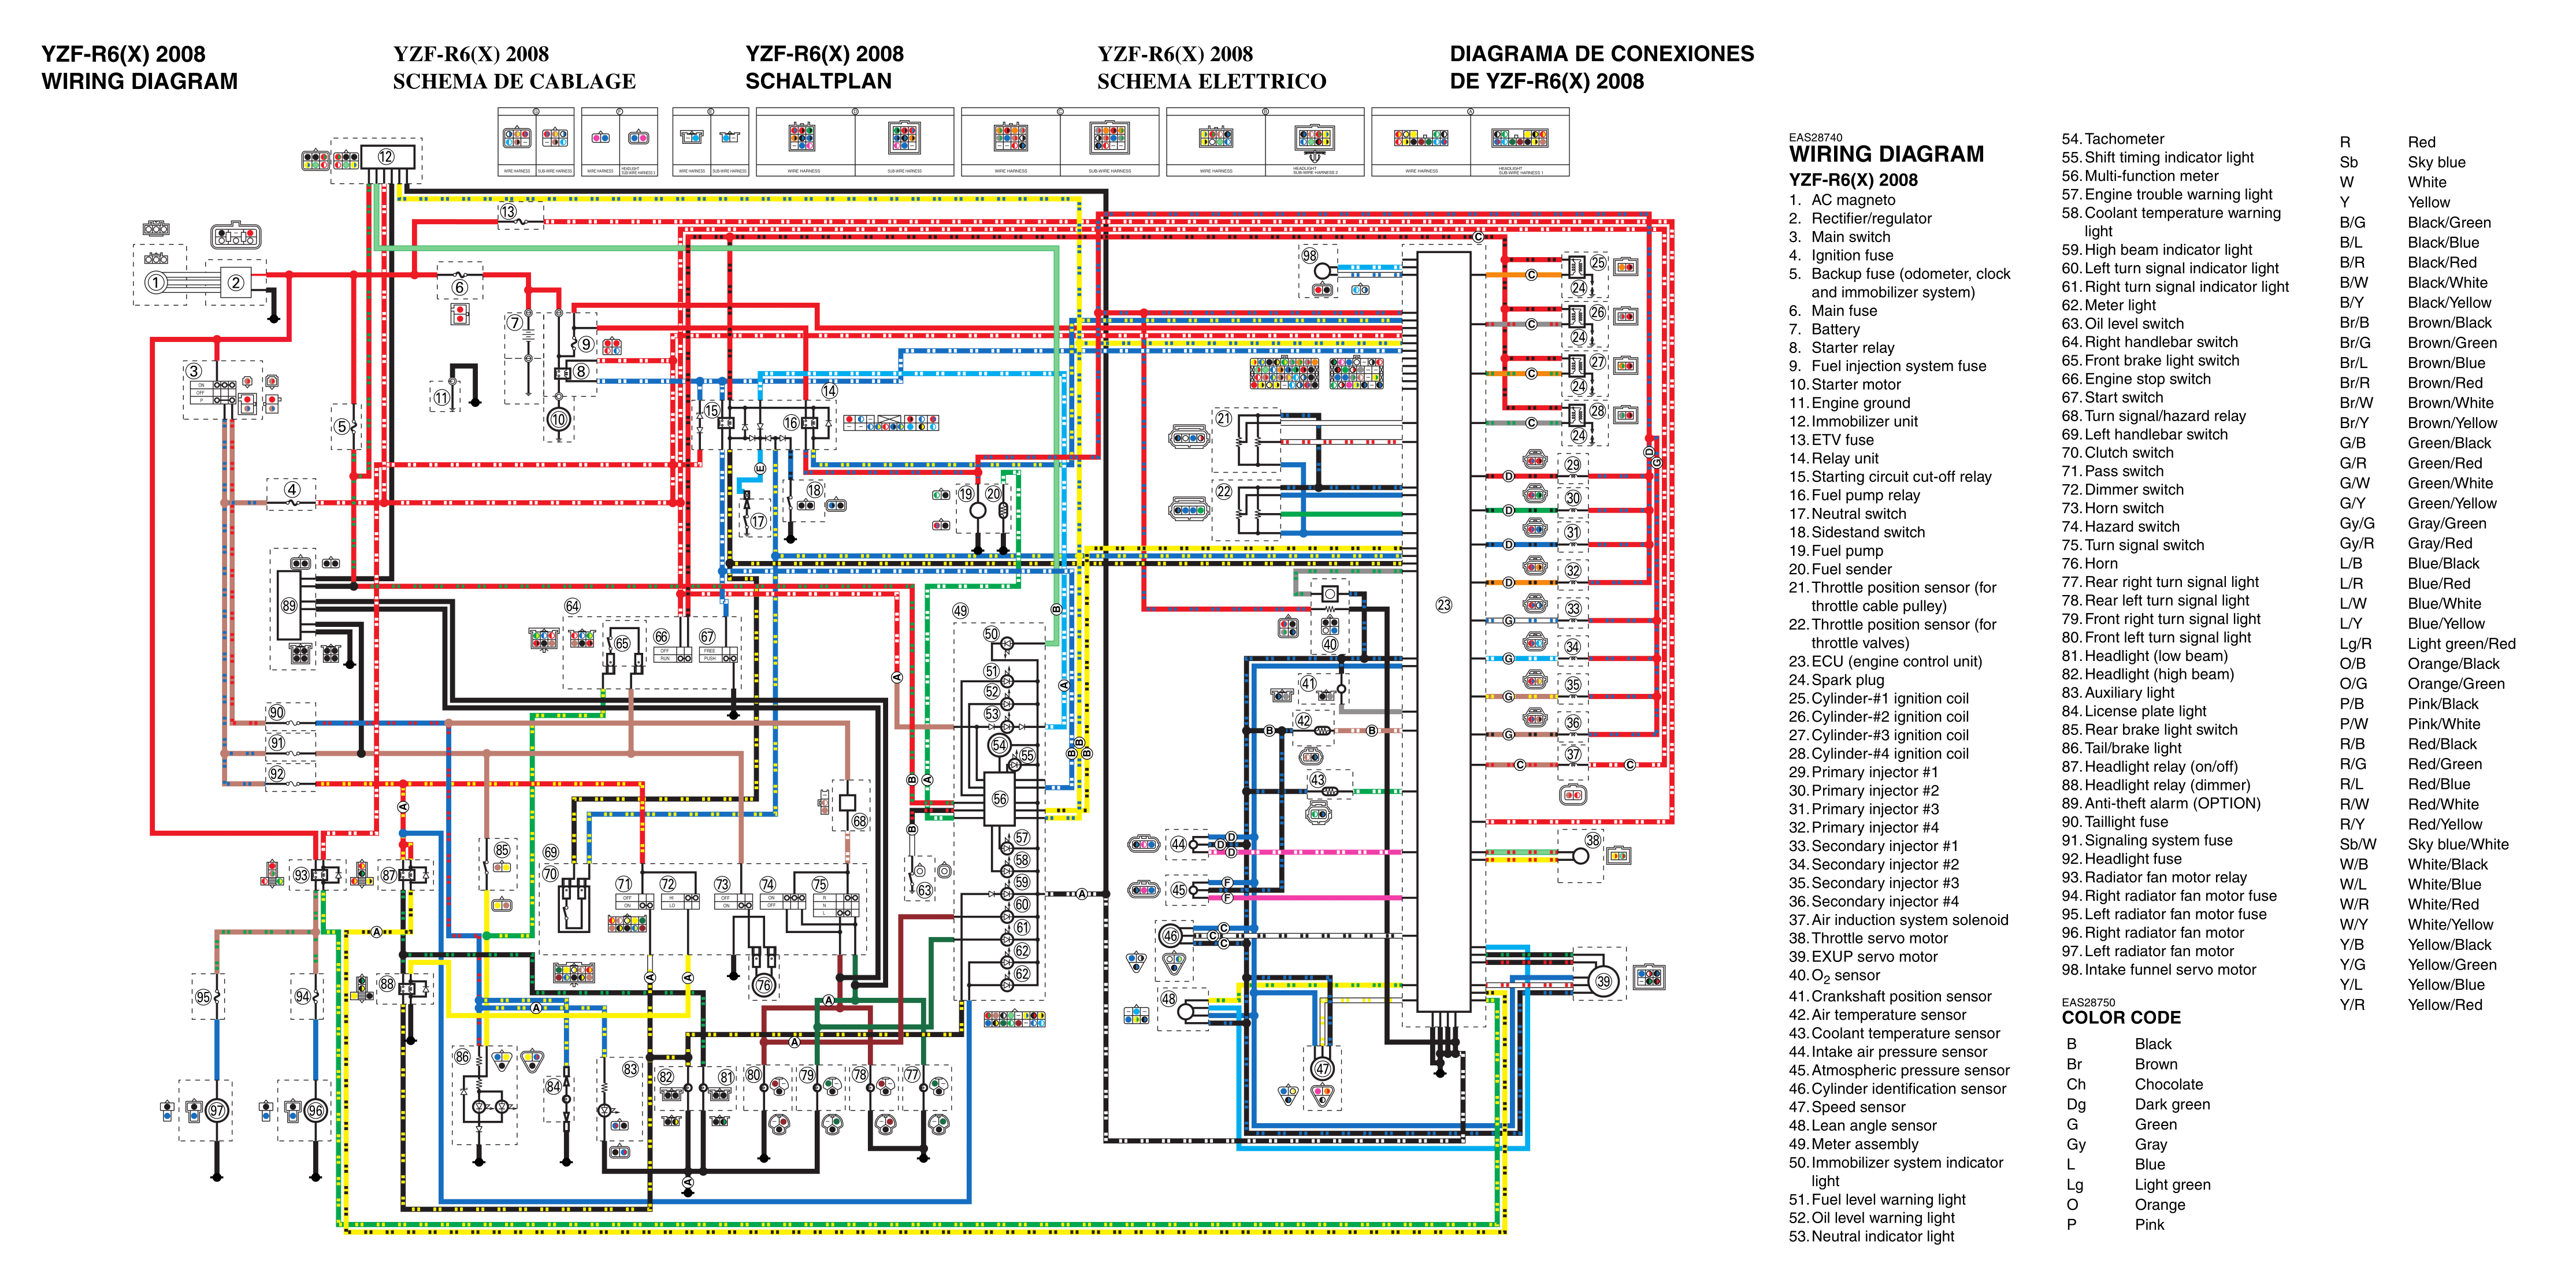 Wiring diagrams  1999 Yamaha Yzf R6 Wiring Diagram    Shifting ContRoll